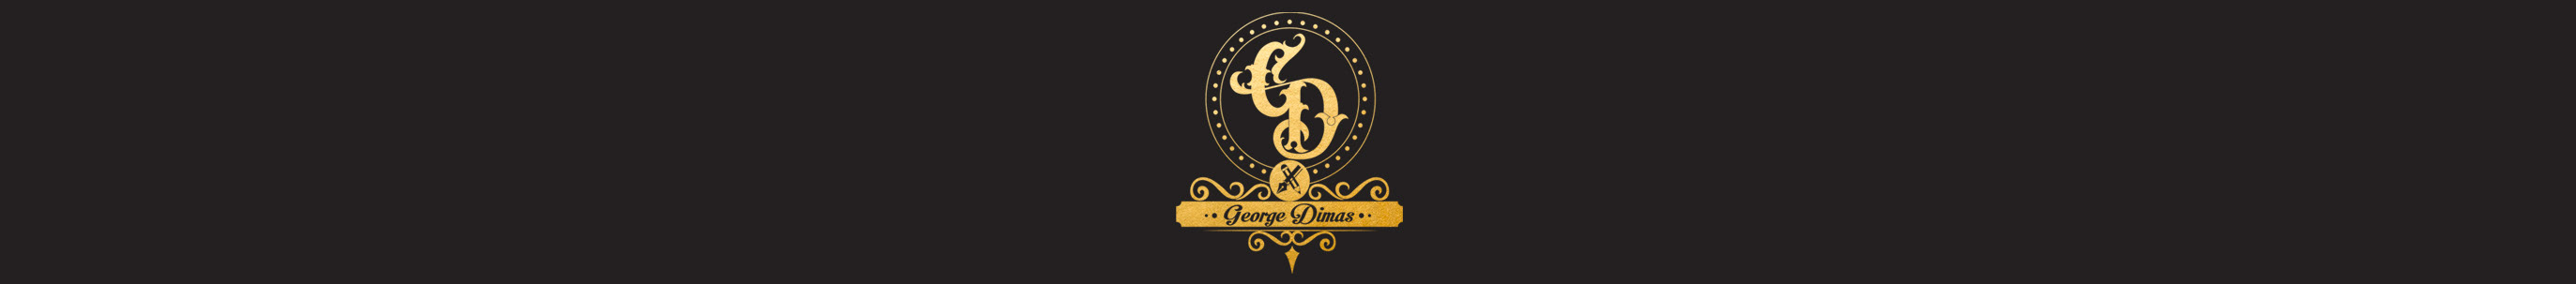 George Dimas's profile banner